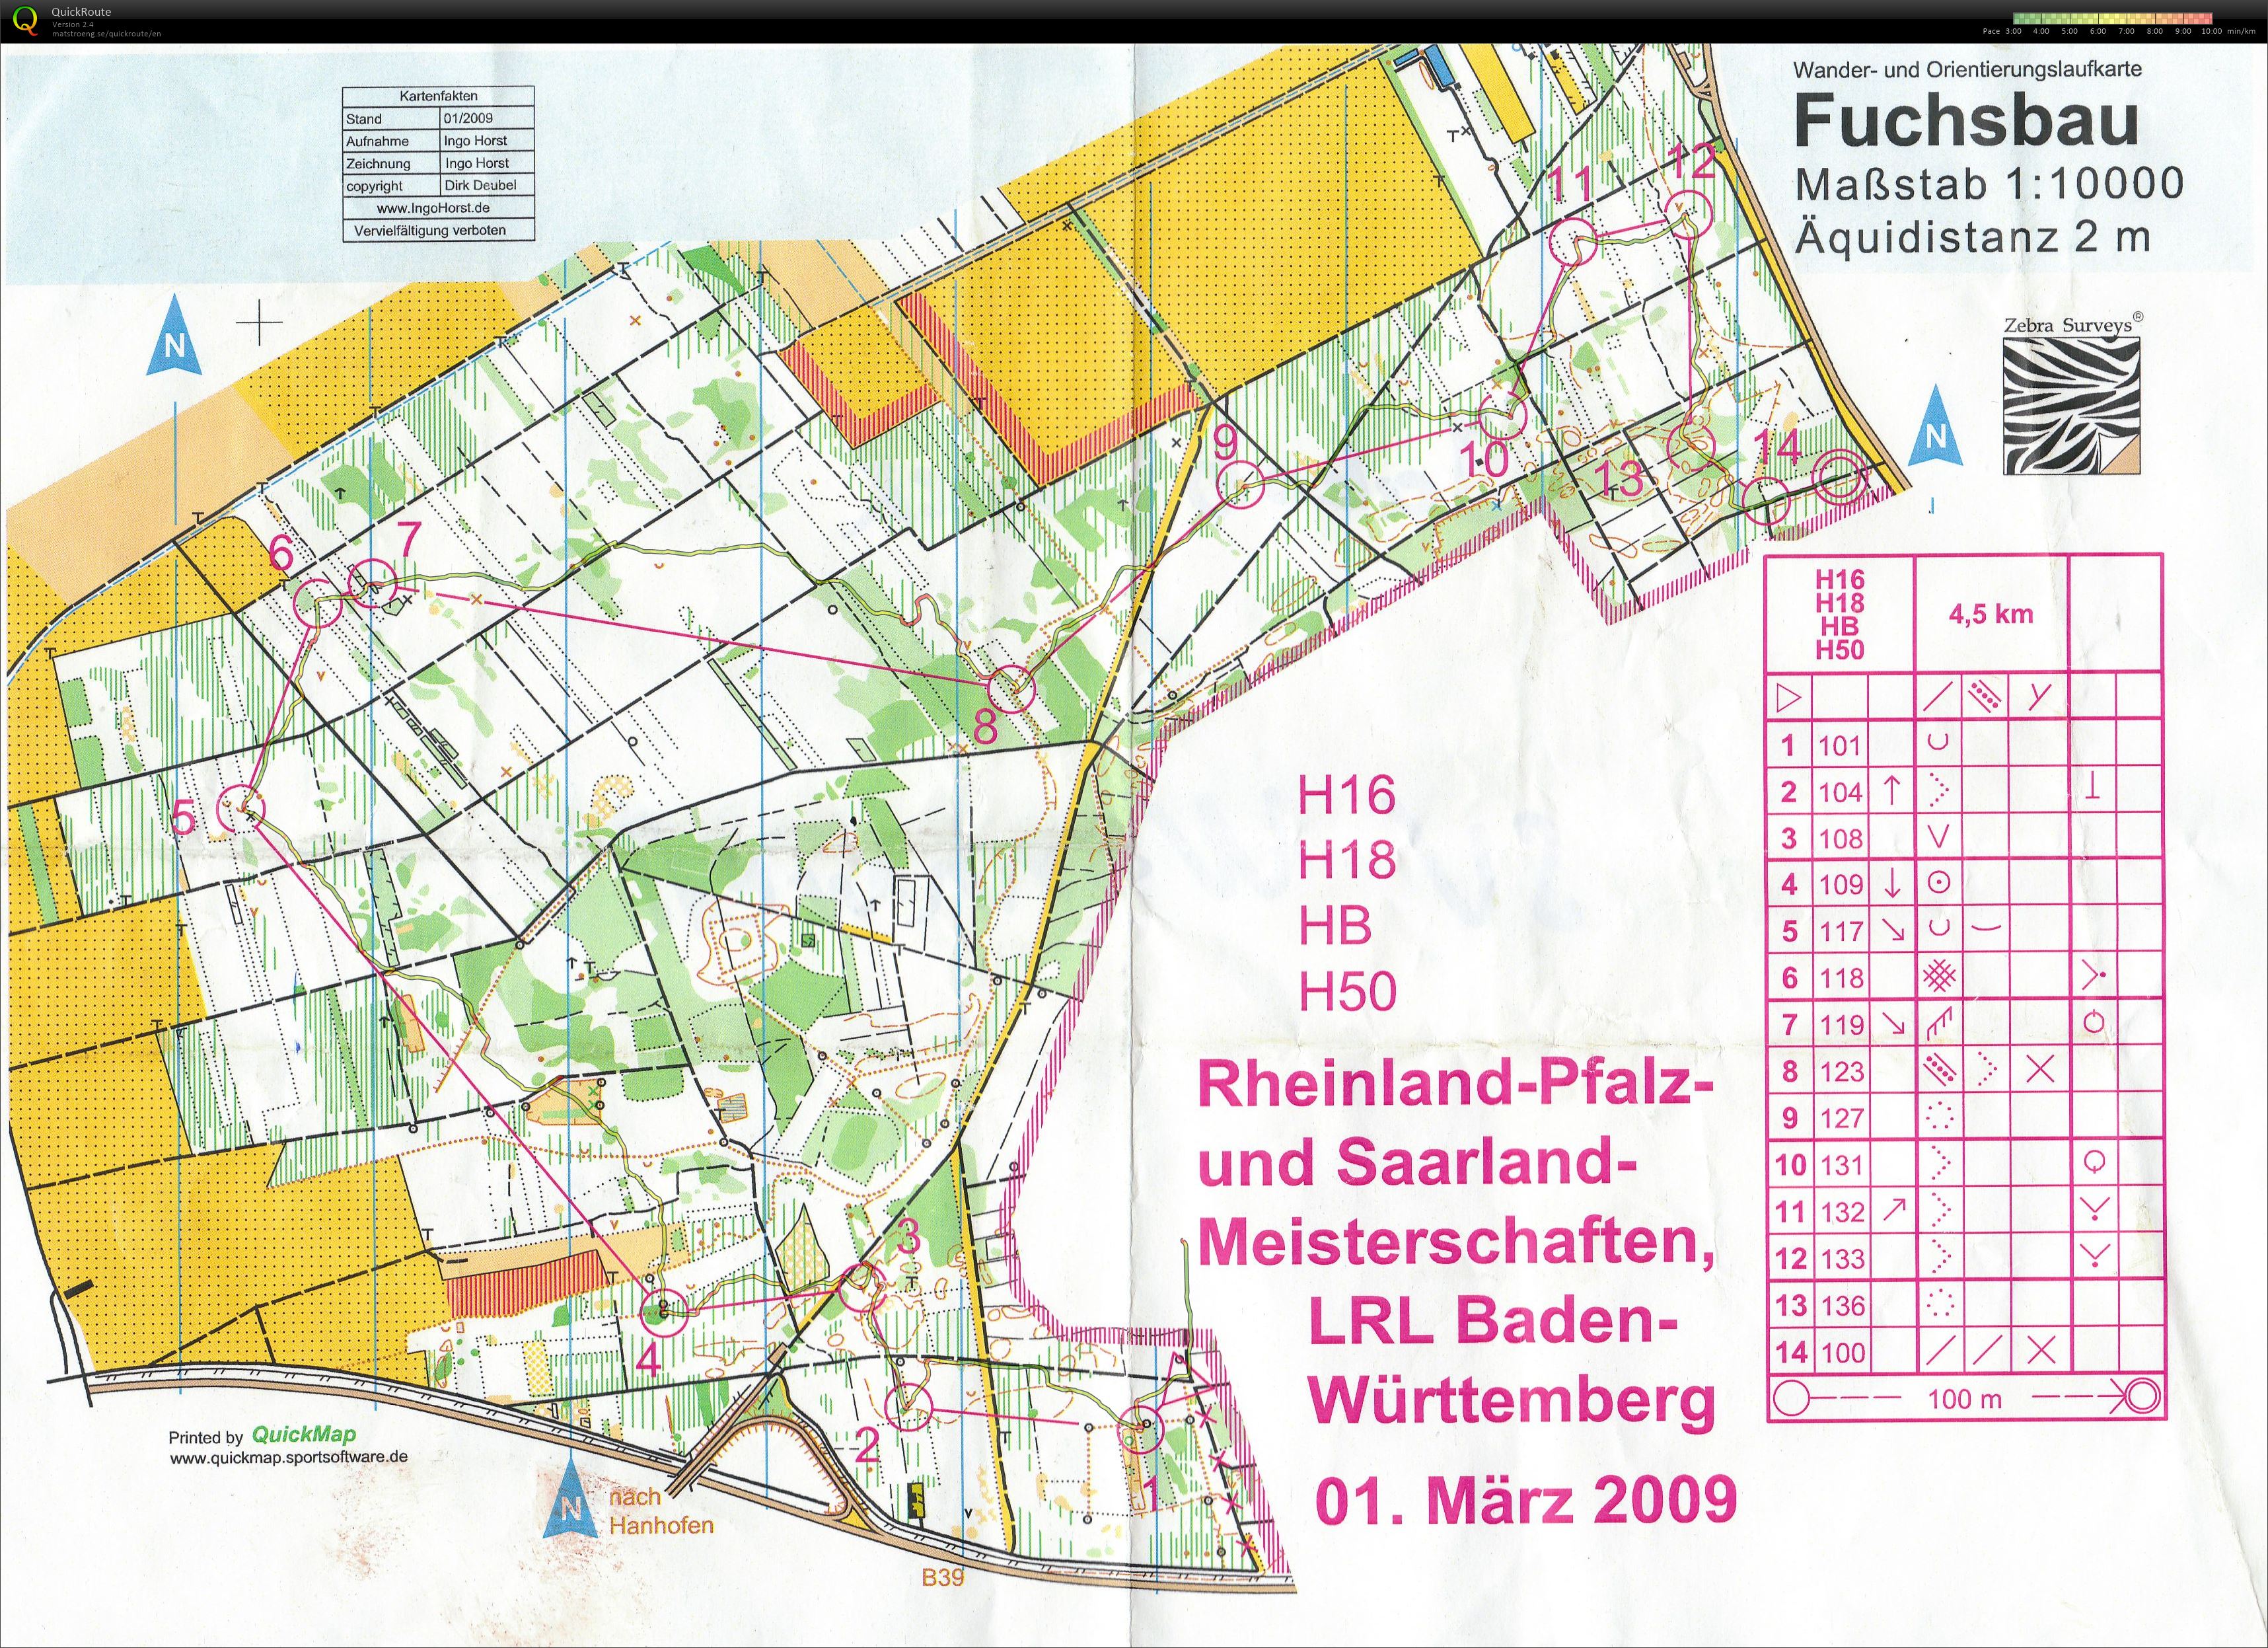 Regional Ranking Event Baden-Württemberg (01/03/2009)